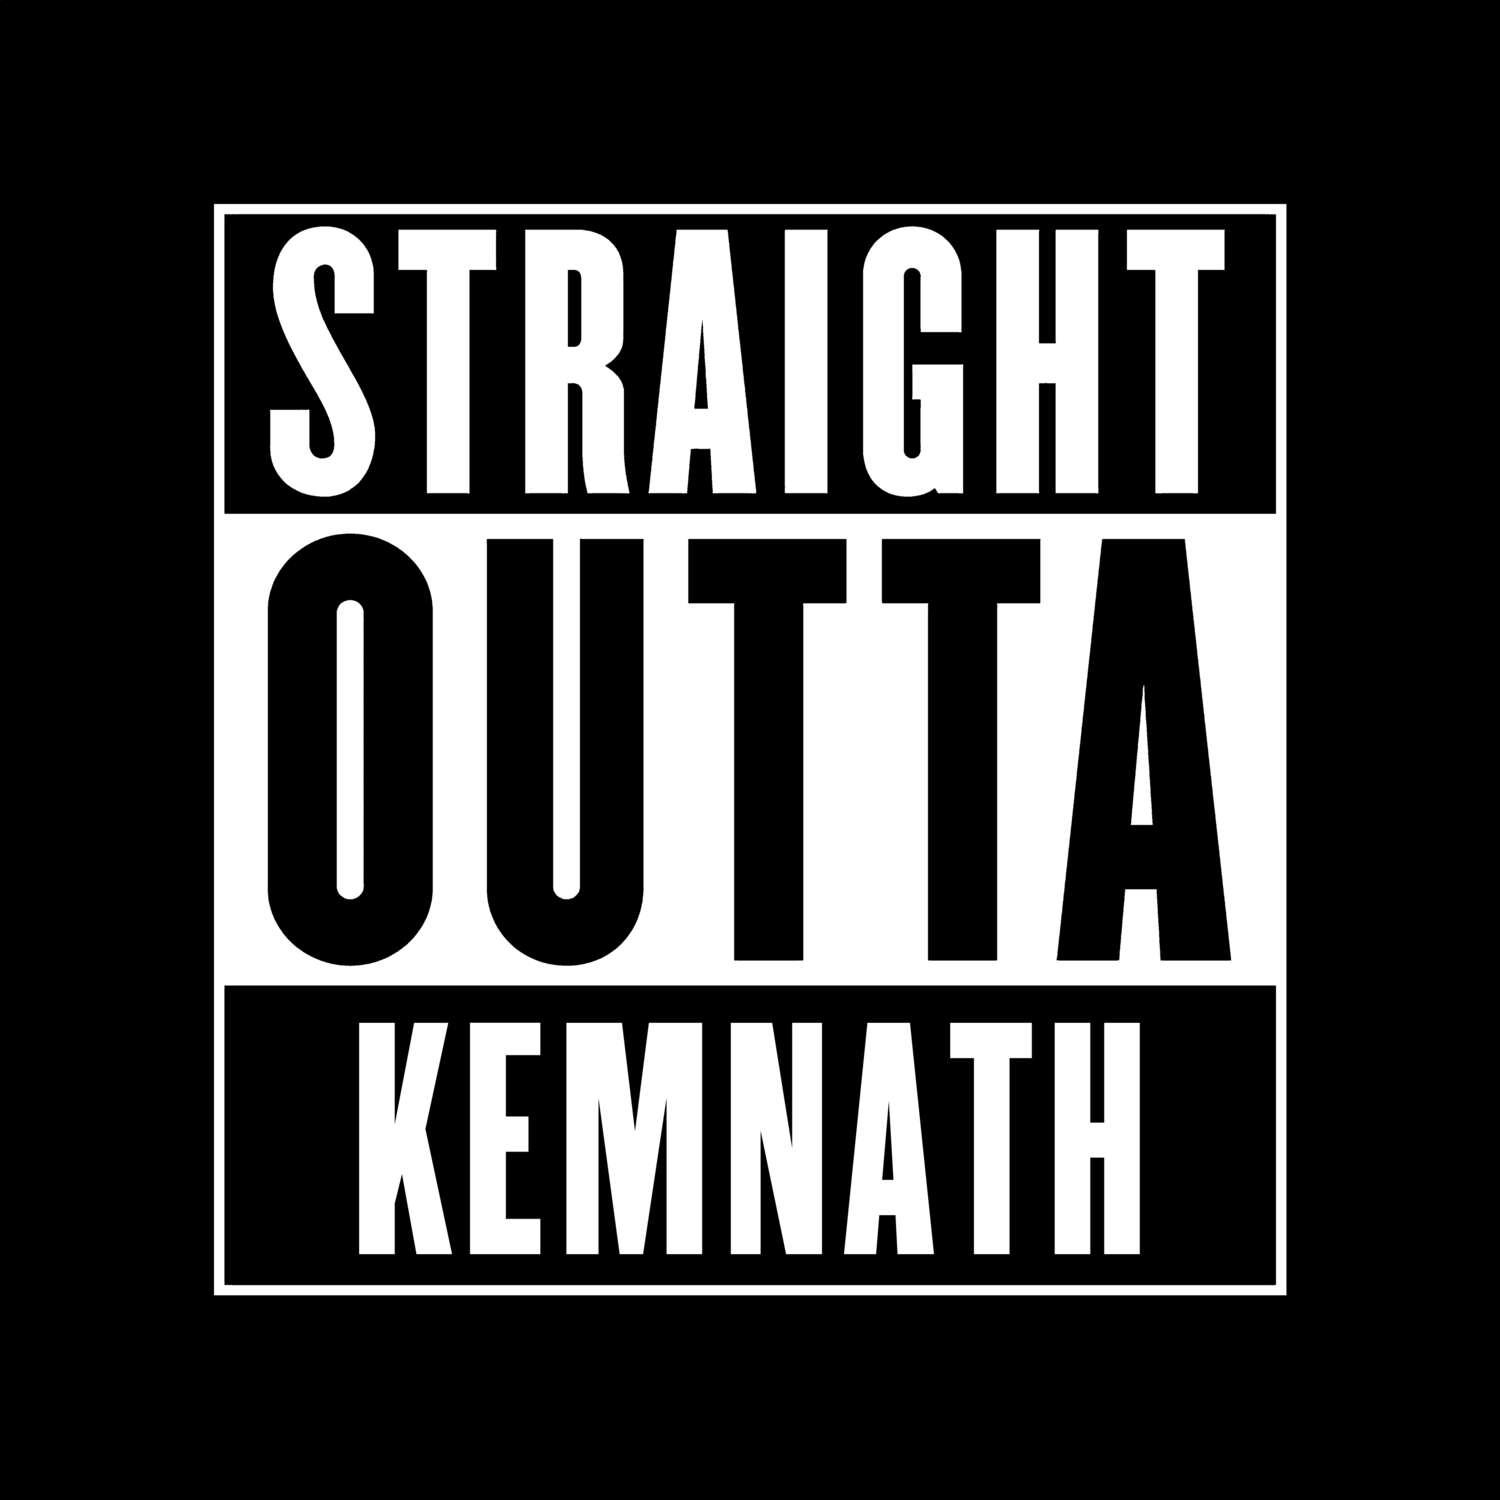 Kemnath T-Shirt »Straight Outta«